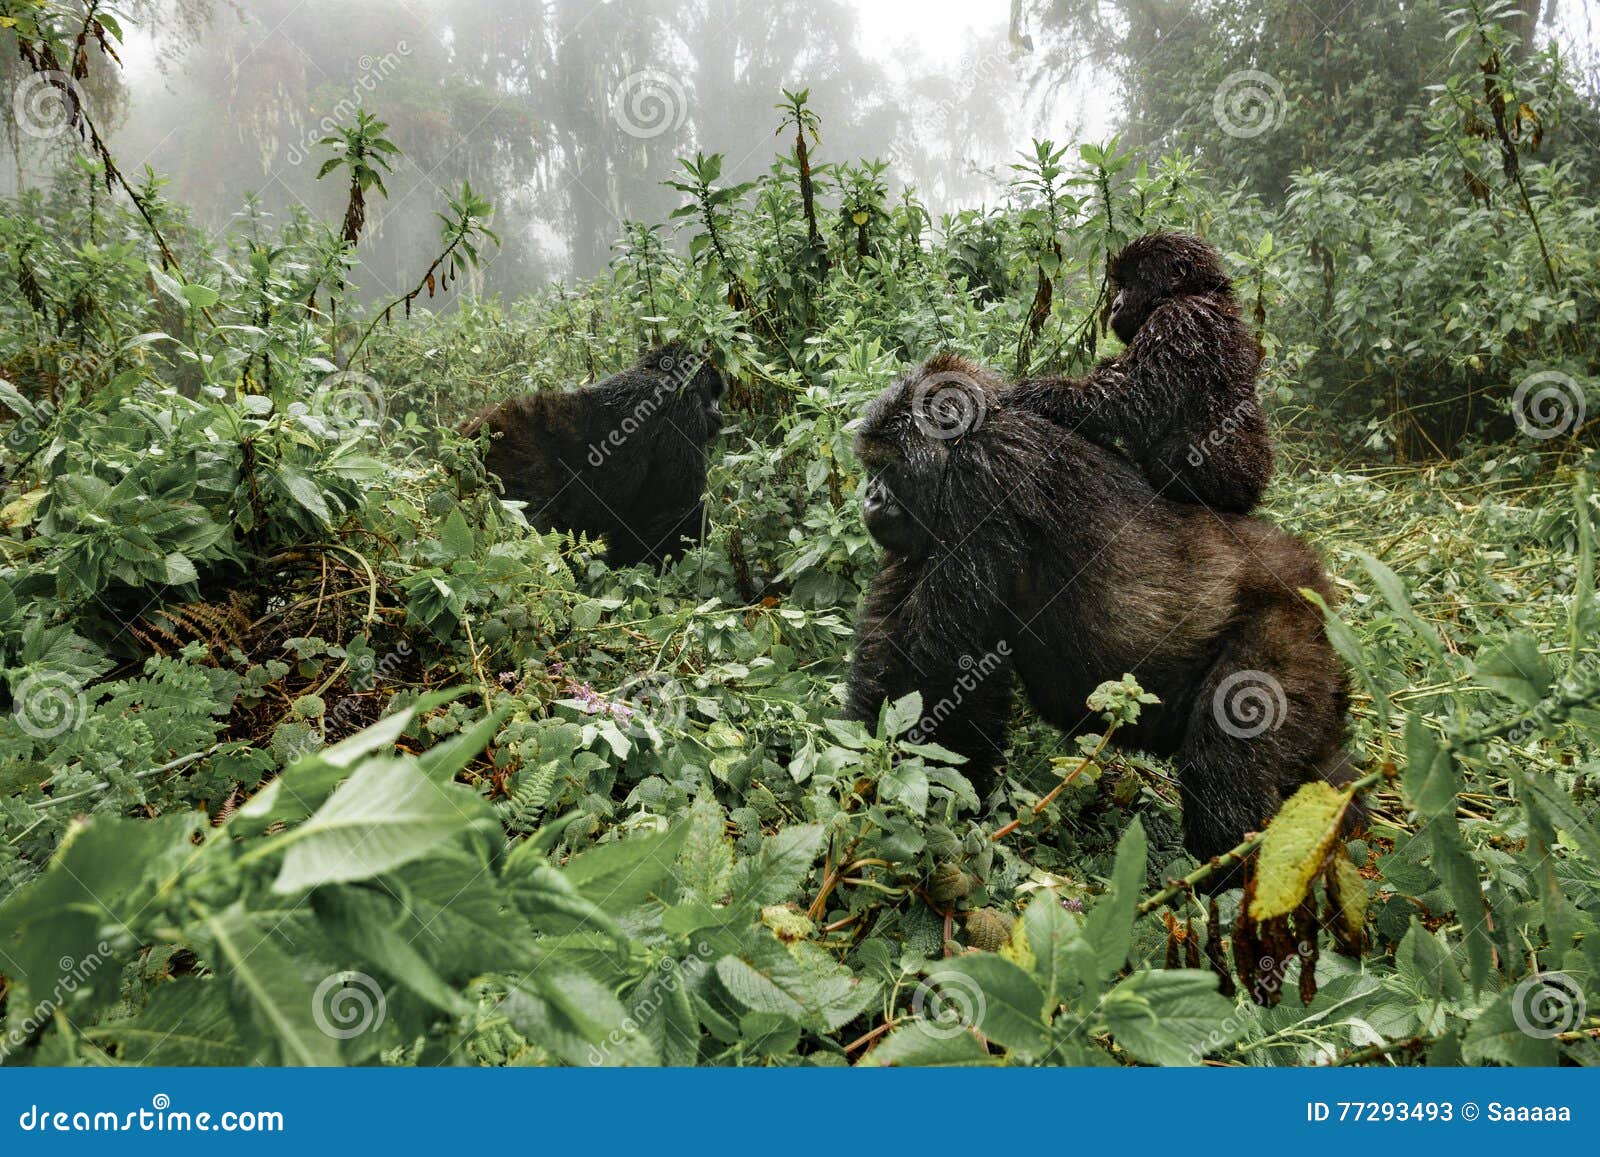 a female mountain gorilla with a baby in rwanda